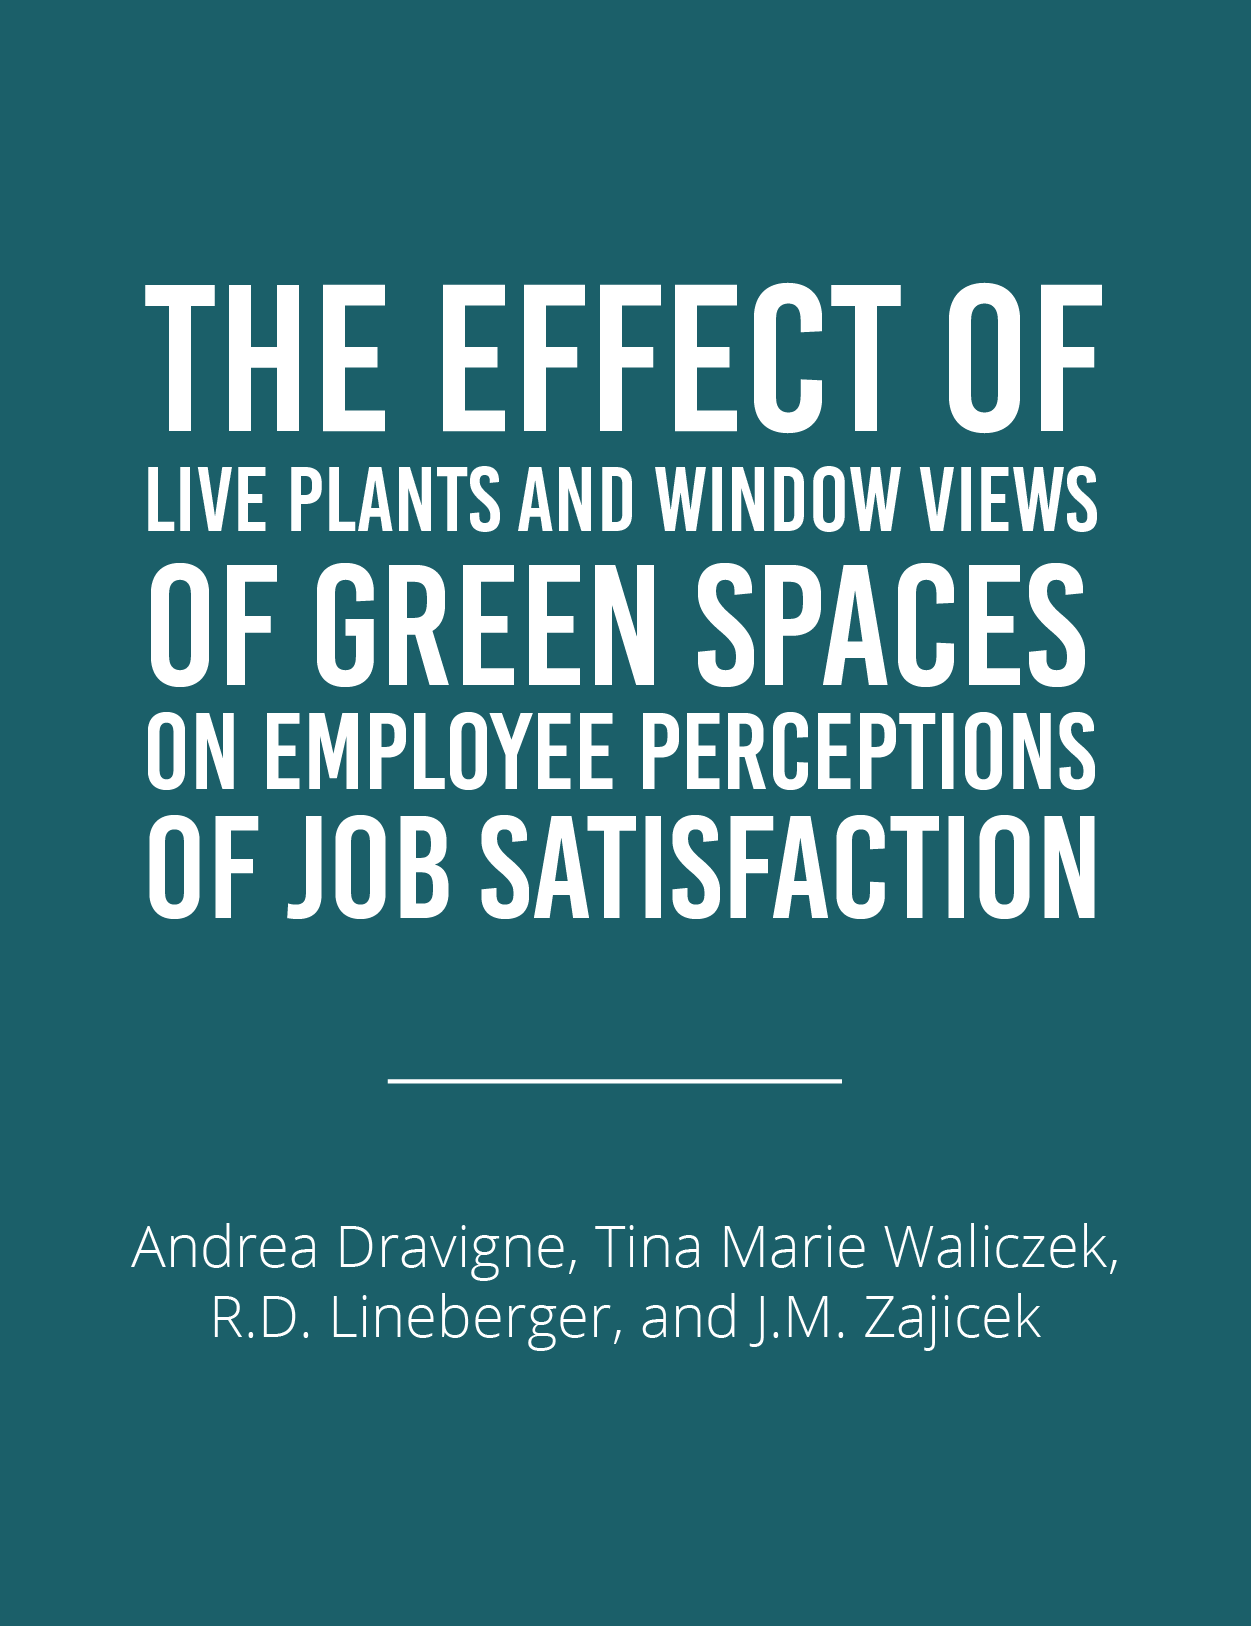 Live Plants & Employee Job SatisfactionFeatured Image